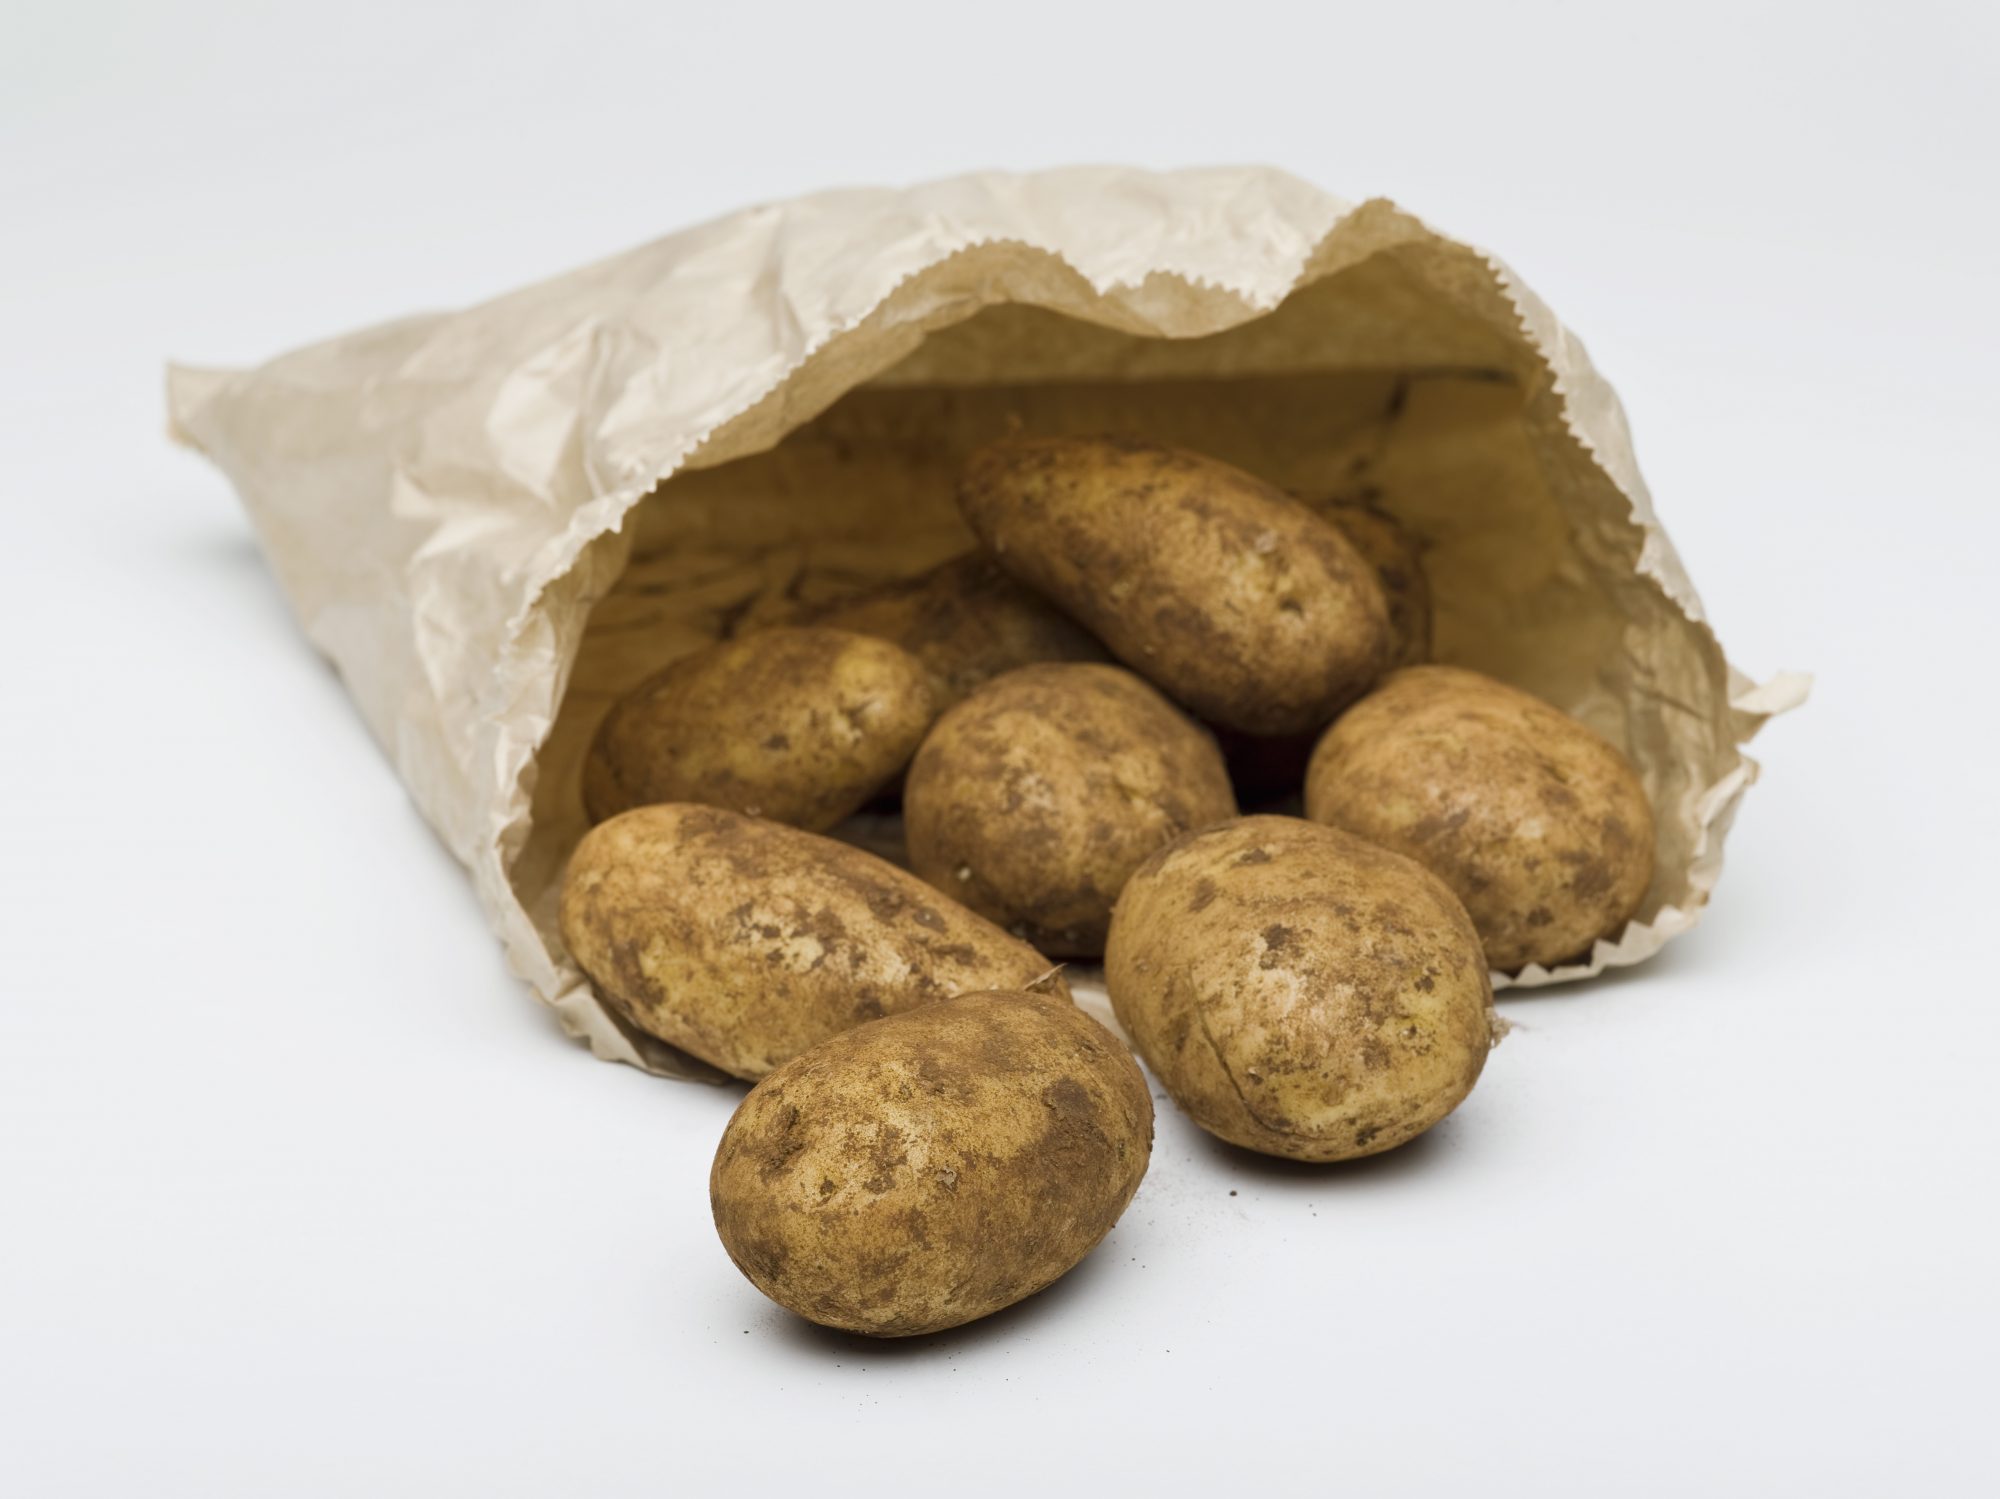 Potatoes in a paper bag Getty 4/7/20